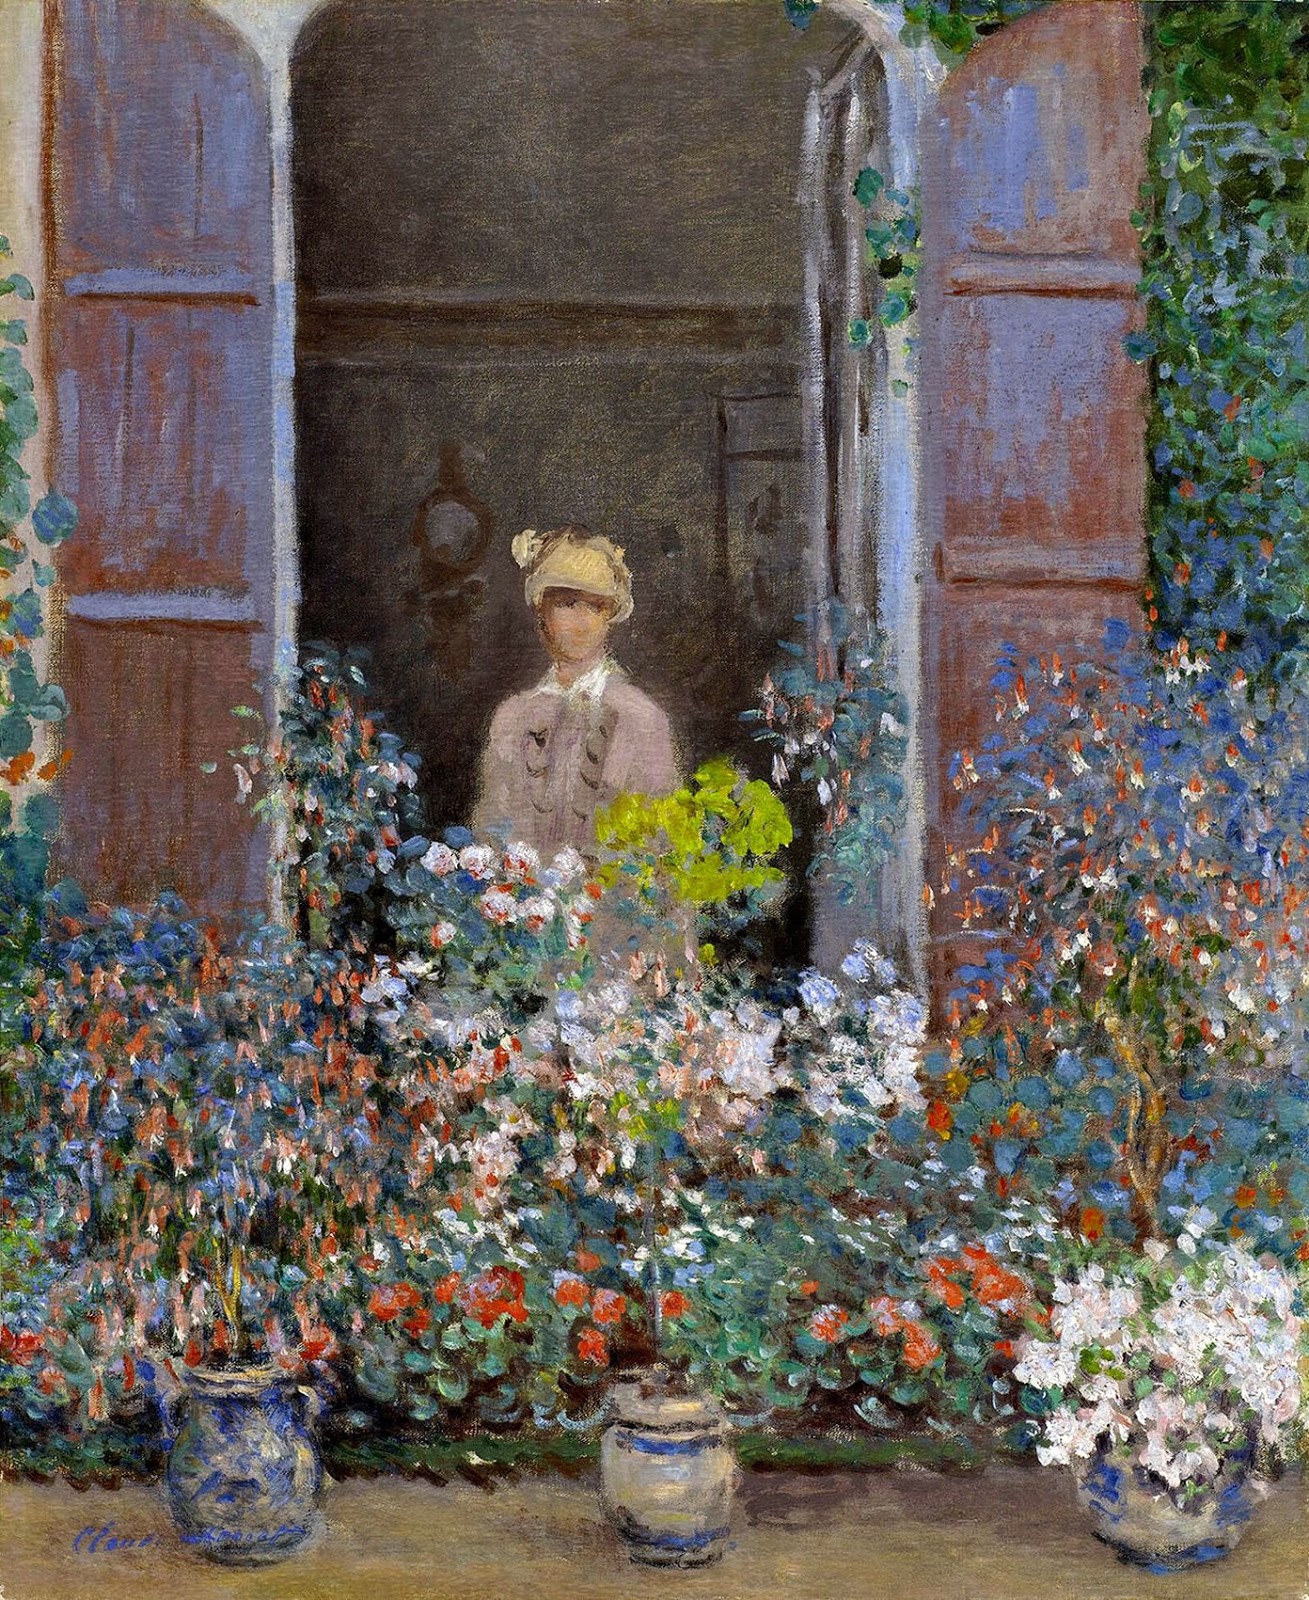 Claude+Monet-1840-1926 (164).jpg